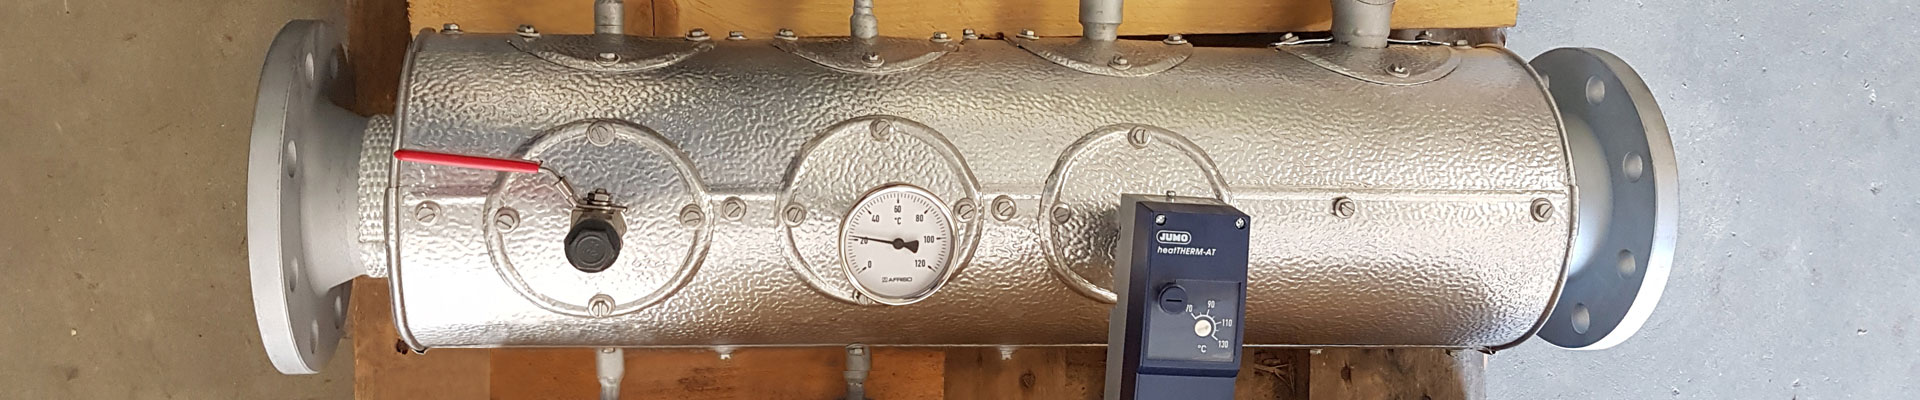 Detail of a hot water boiler